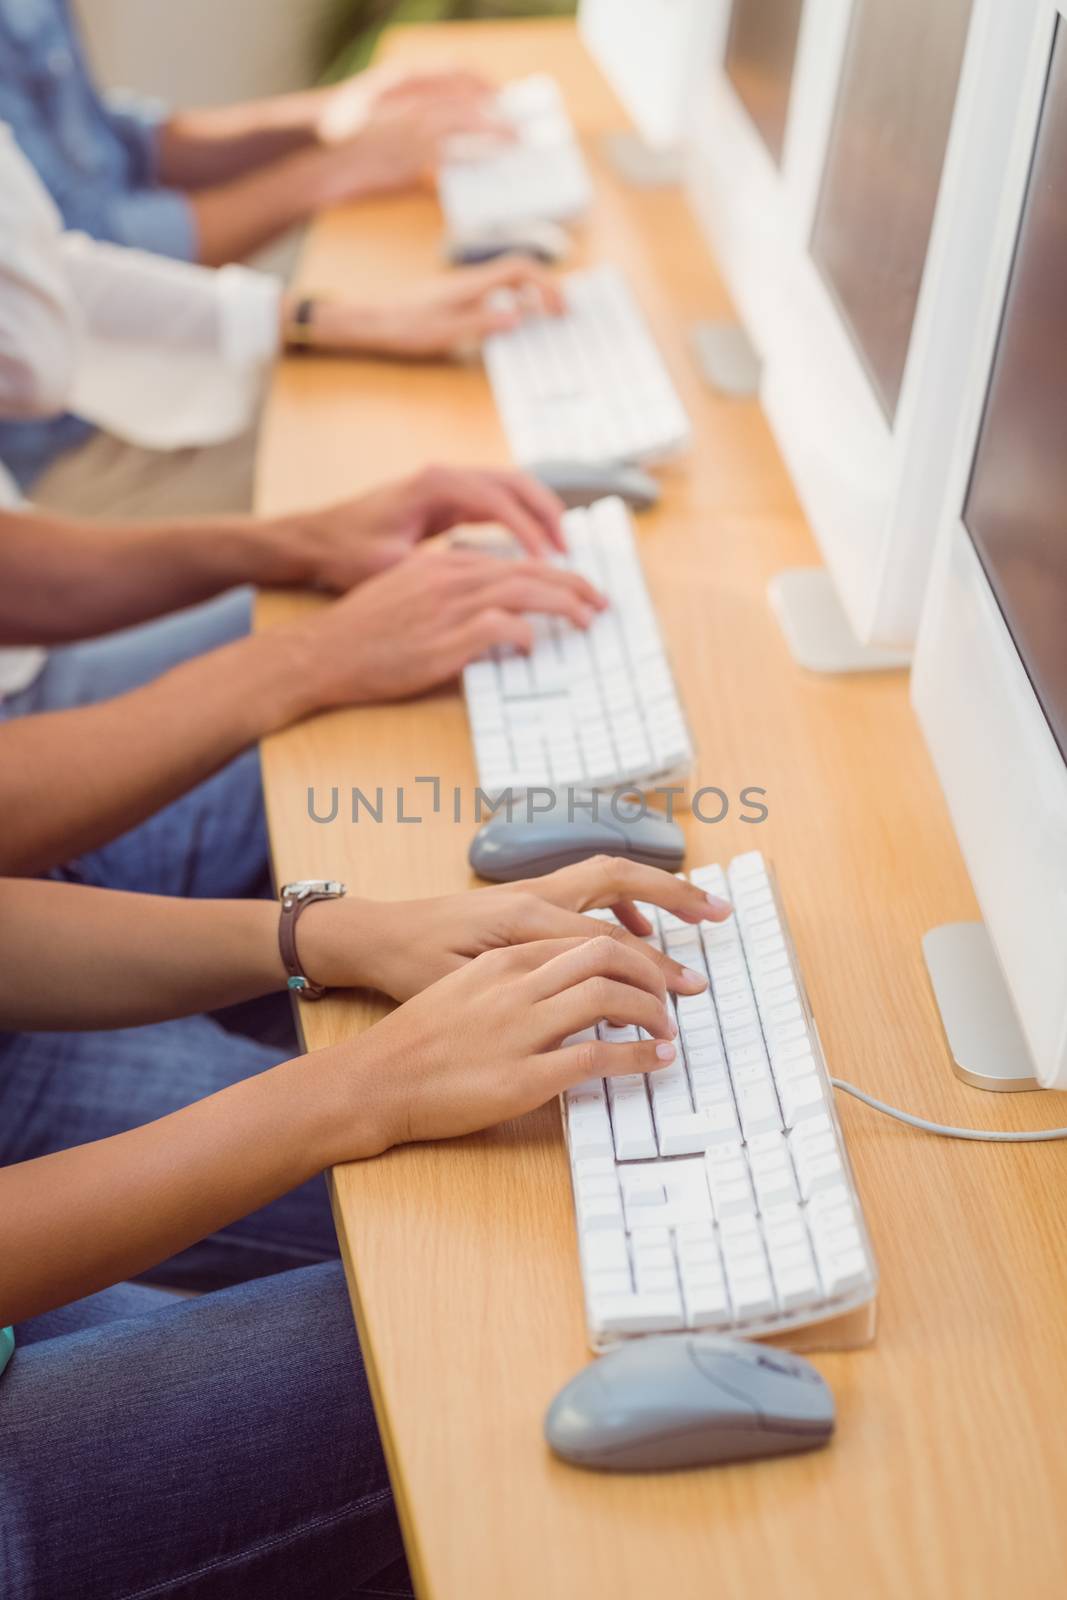 Business people typing on keyboard by Wavebreakmedia